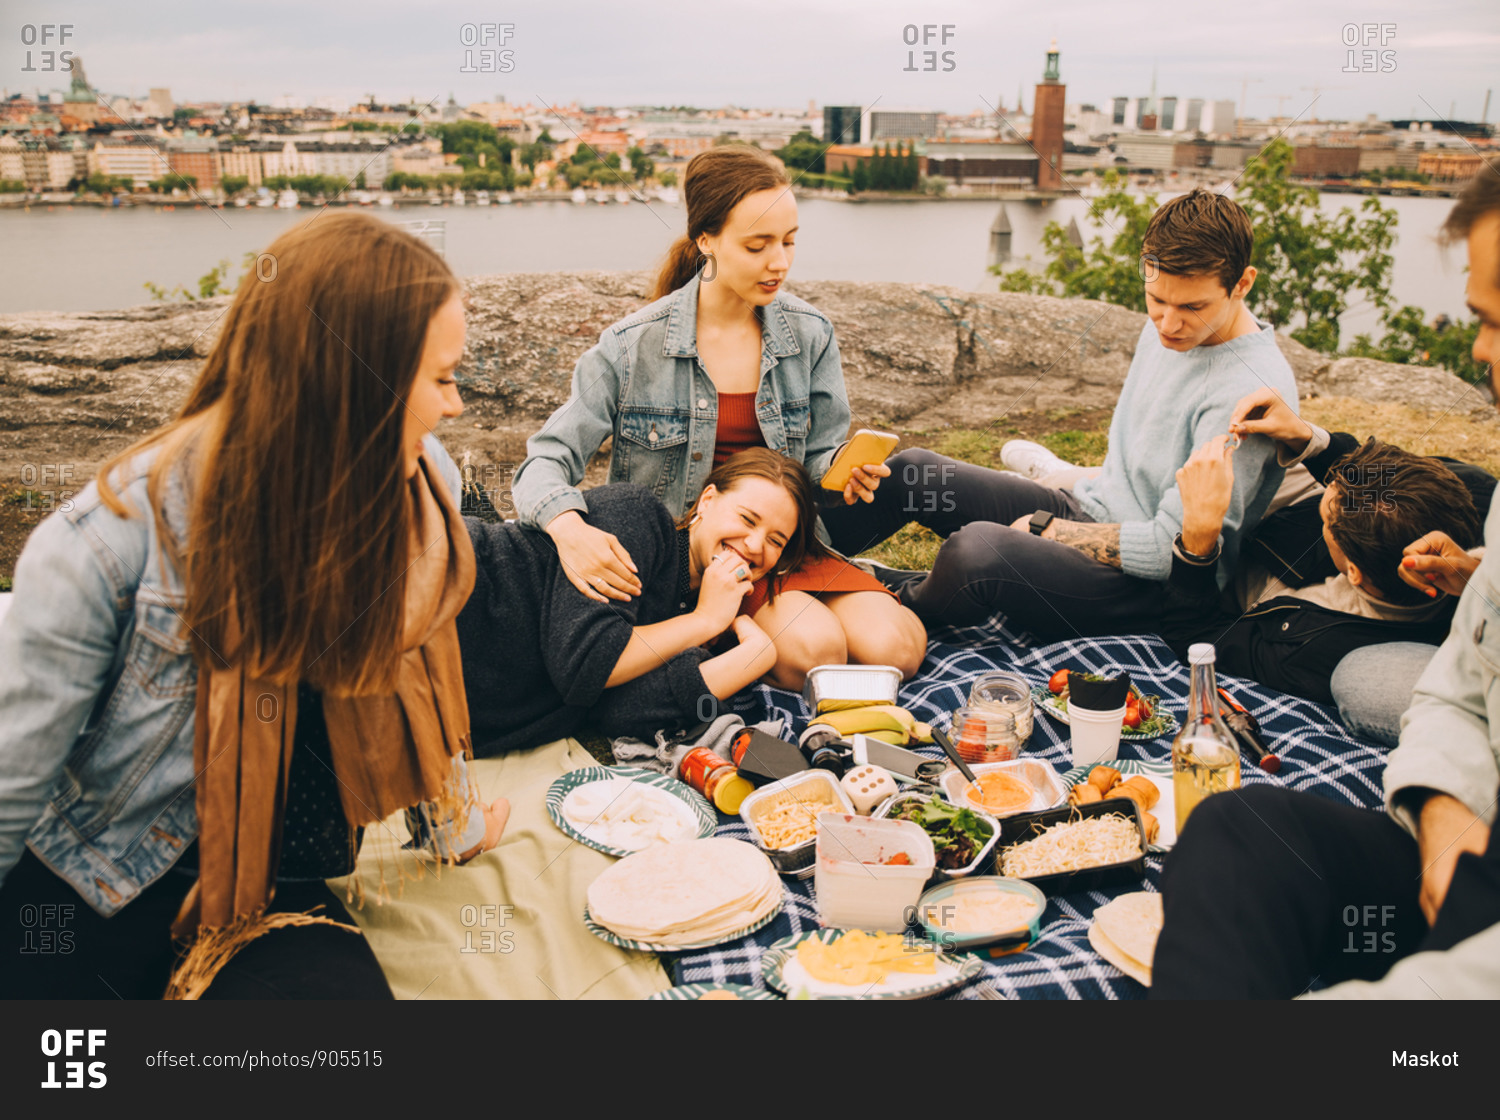 Male and female friends enjoying food on picnic blanket